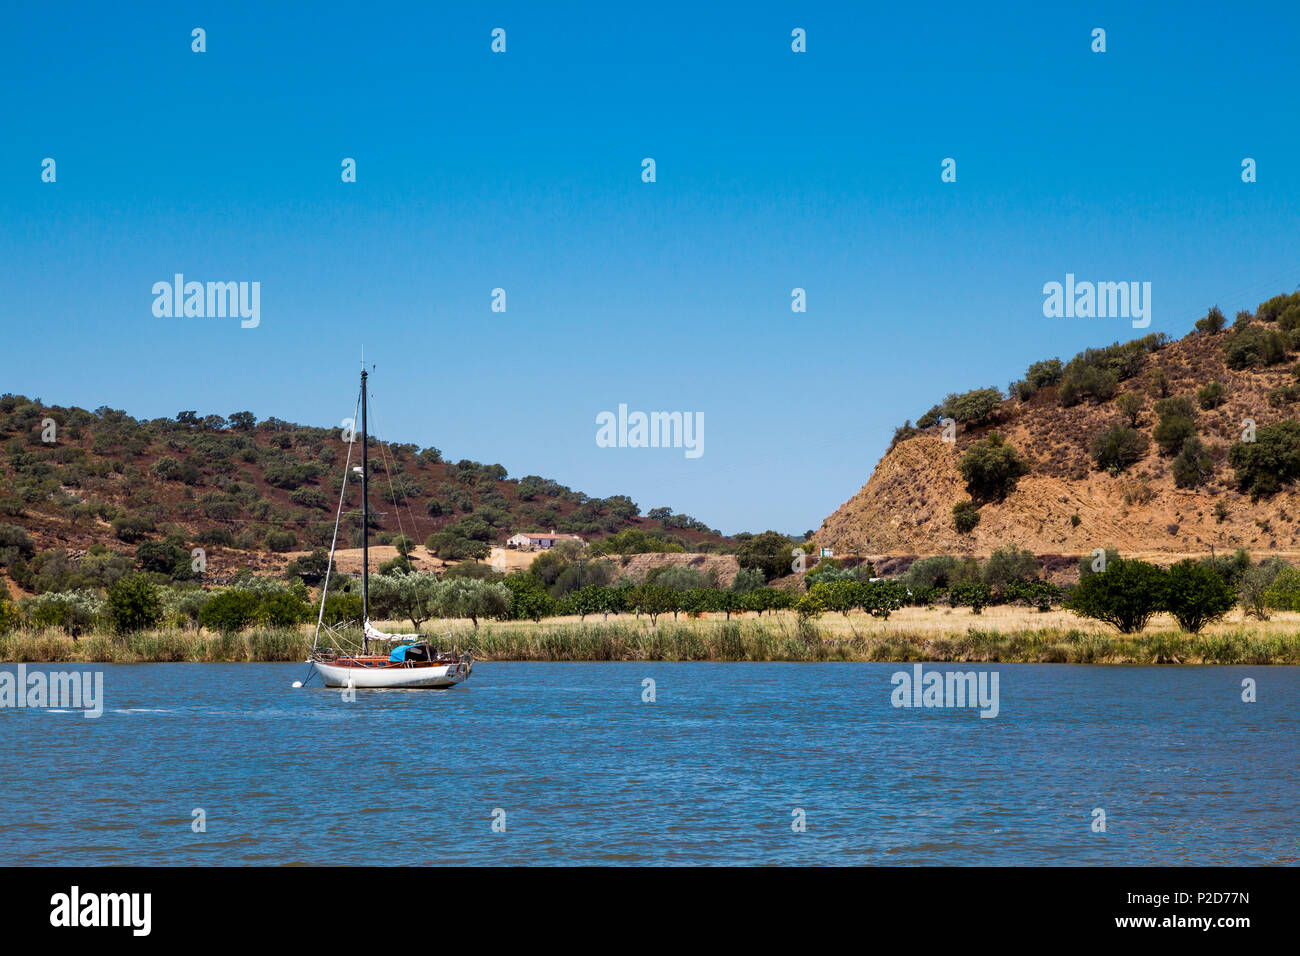 Bootsfahrt auf dem Grenzfluss Guadiana, Algarve, Portugal Stockfoto